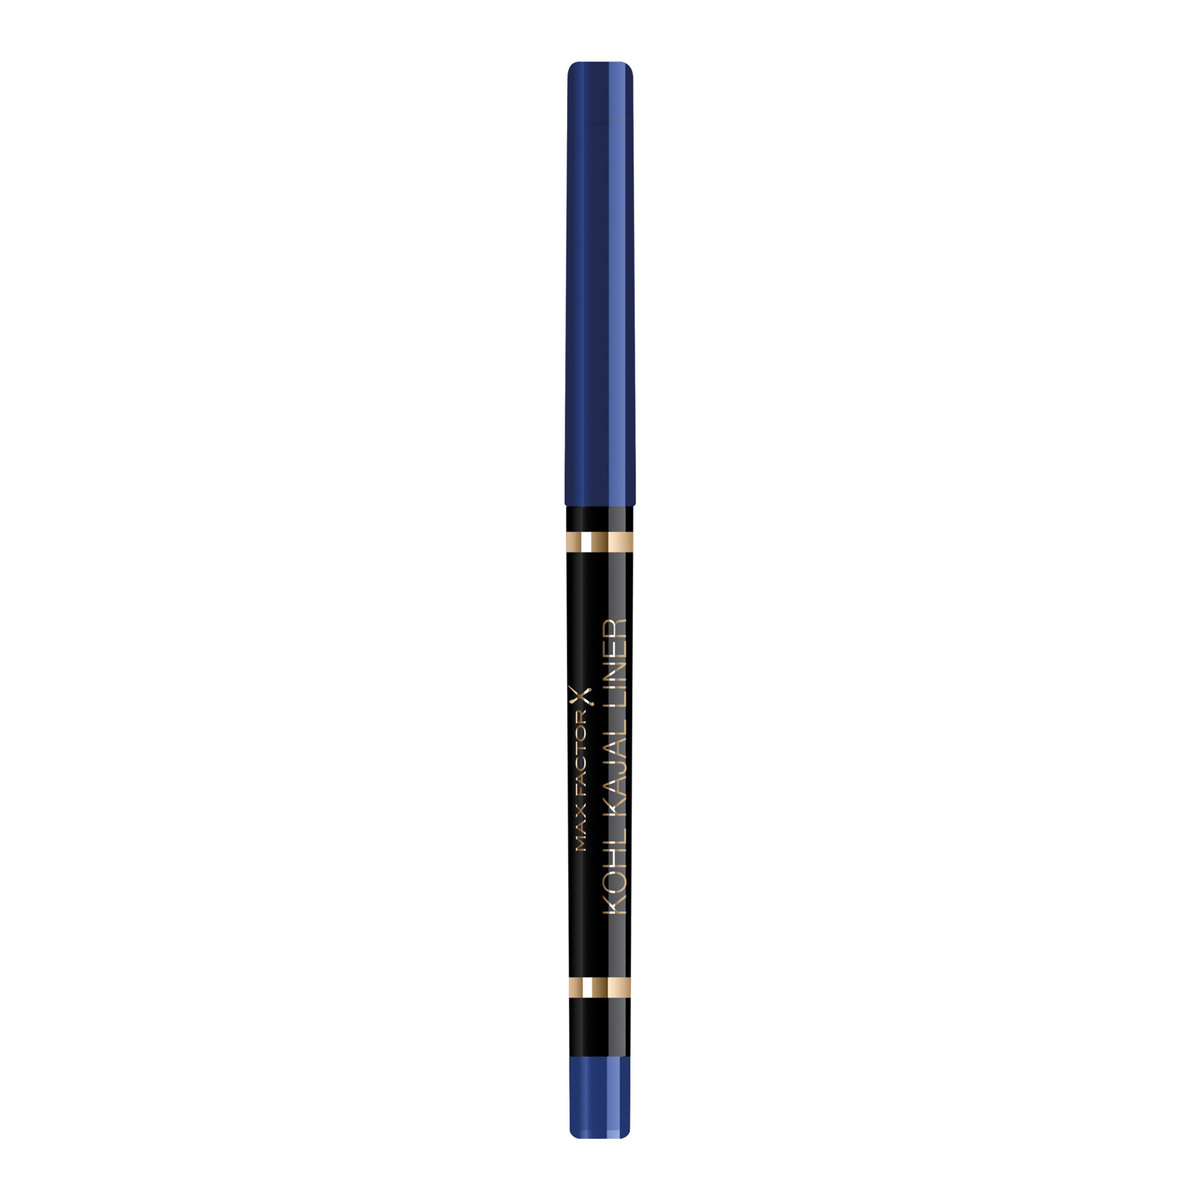 Max Factor Masterpiece Kohl Kajal Eye Liner Pencil, 02 Azure, 5 g